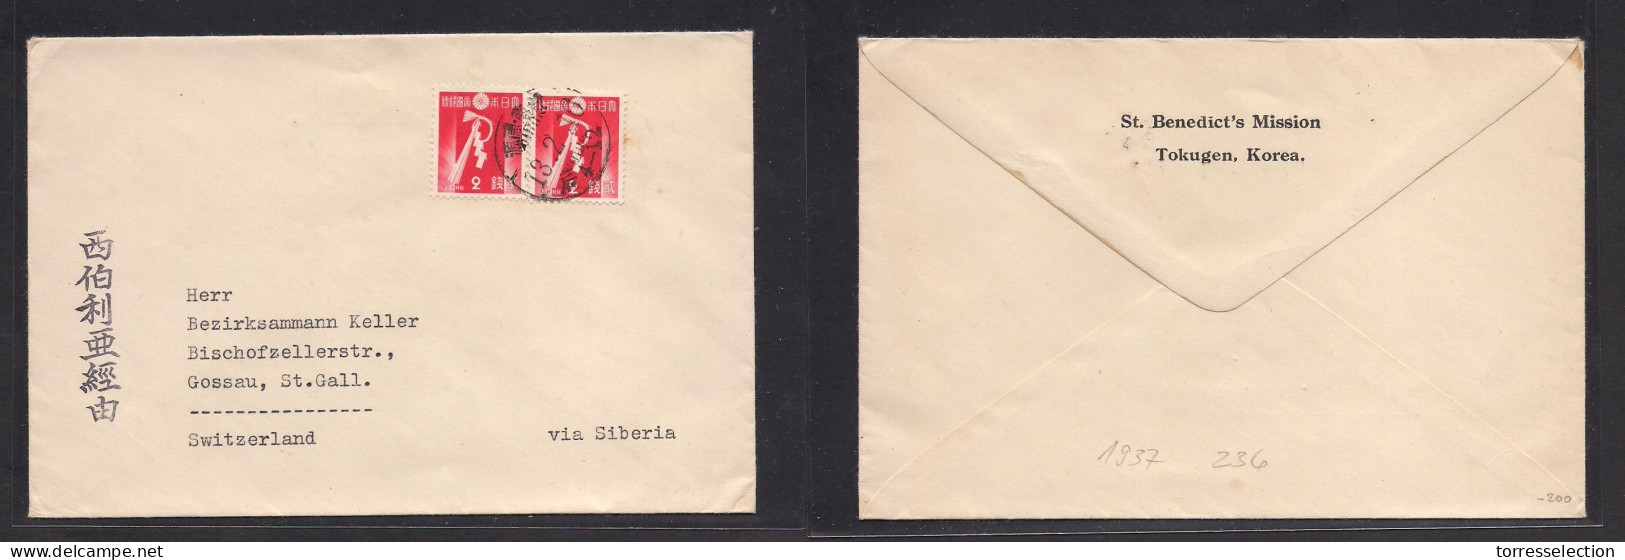 KOREA. 1937 (16 Feb) Tokugen - Switzerland, St. Gallen. Japanese Occup Via Siberia. Multifkd Japanese Stamps Envelope, C - Korea (...-1945)